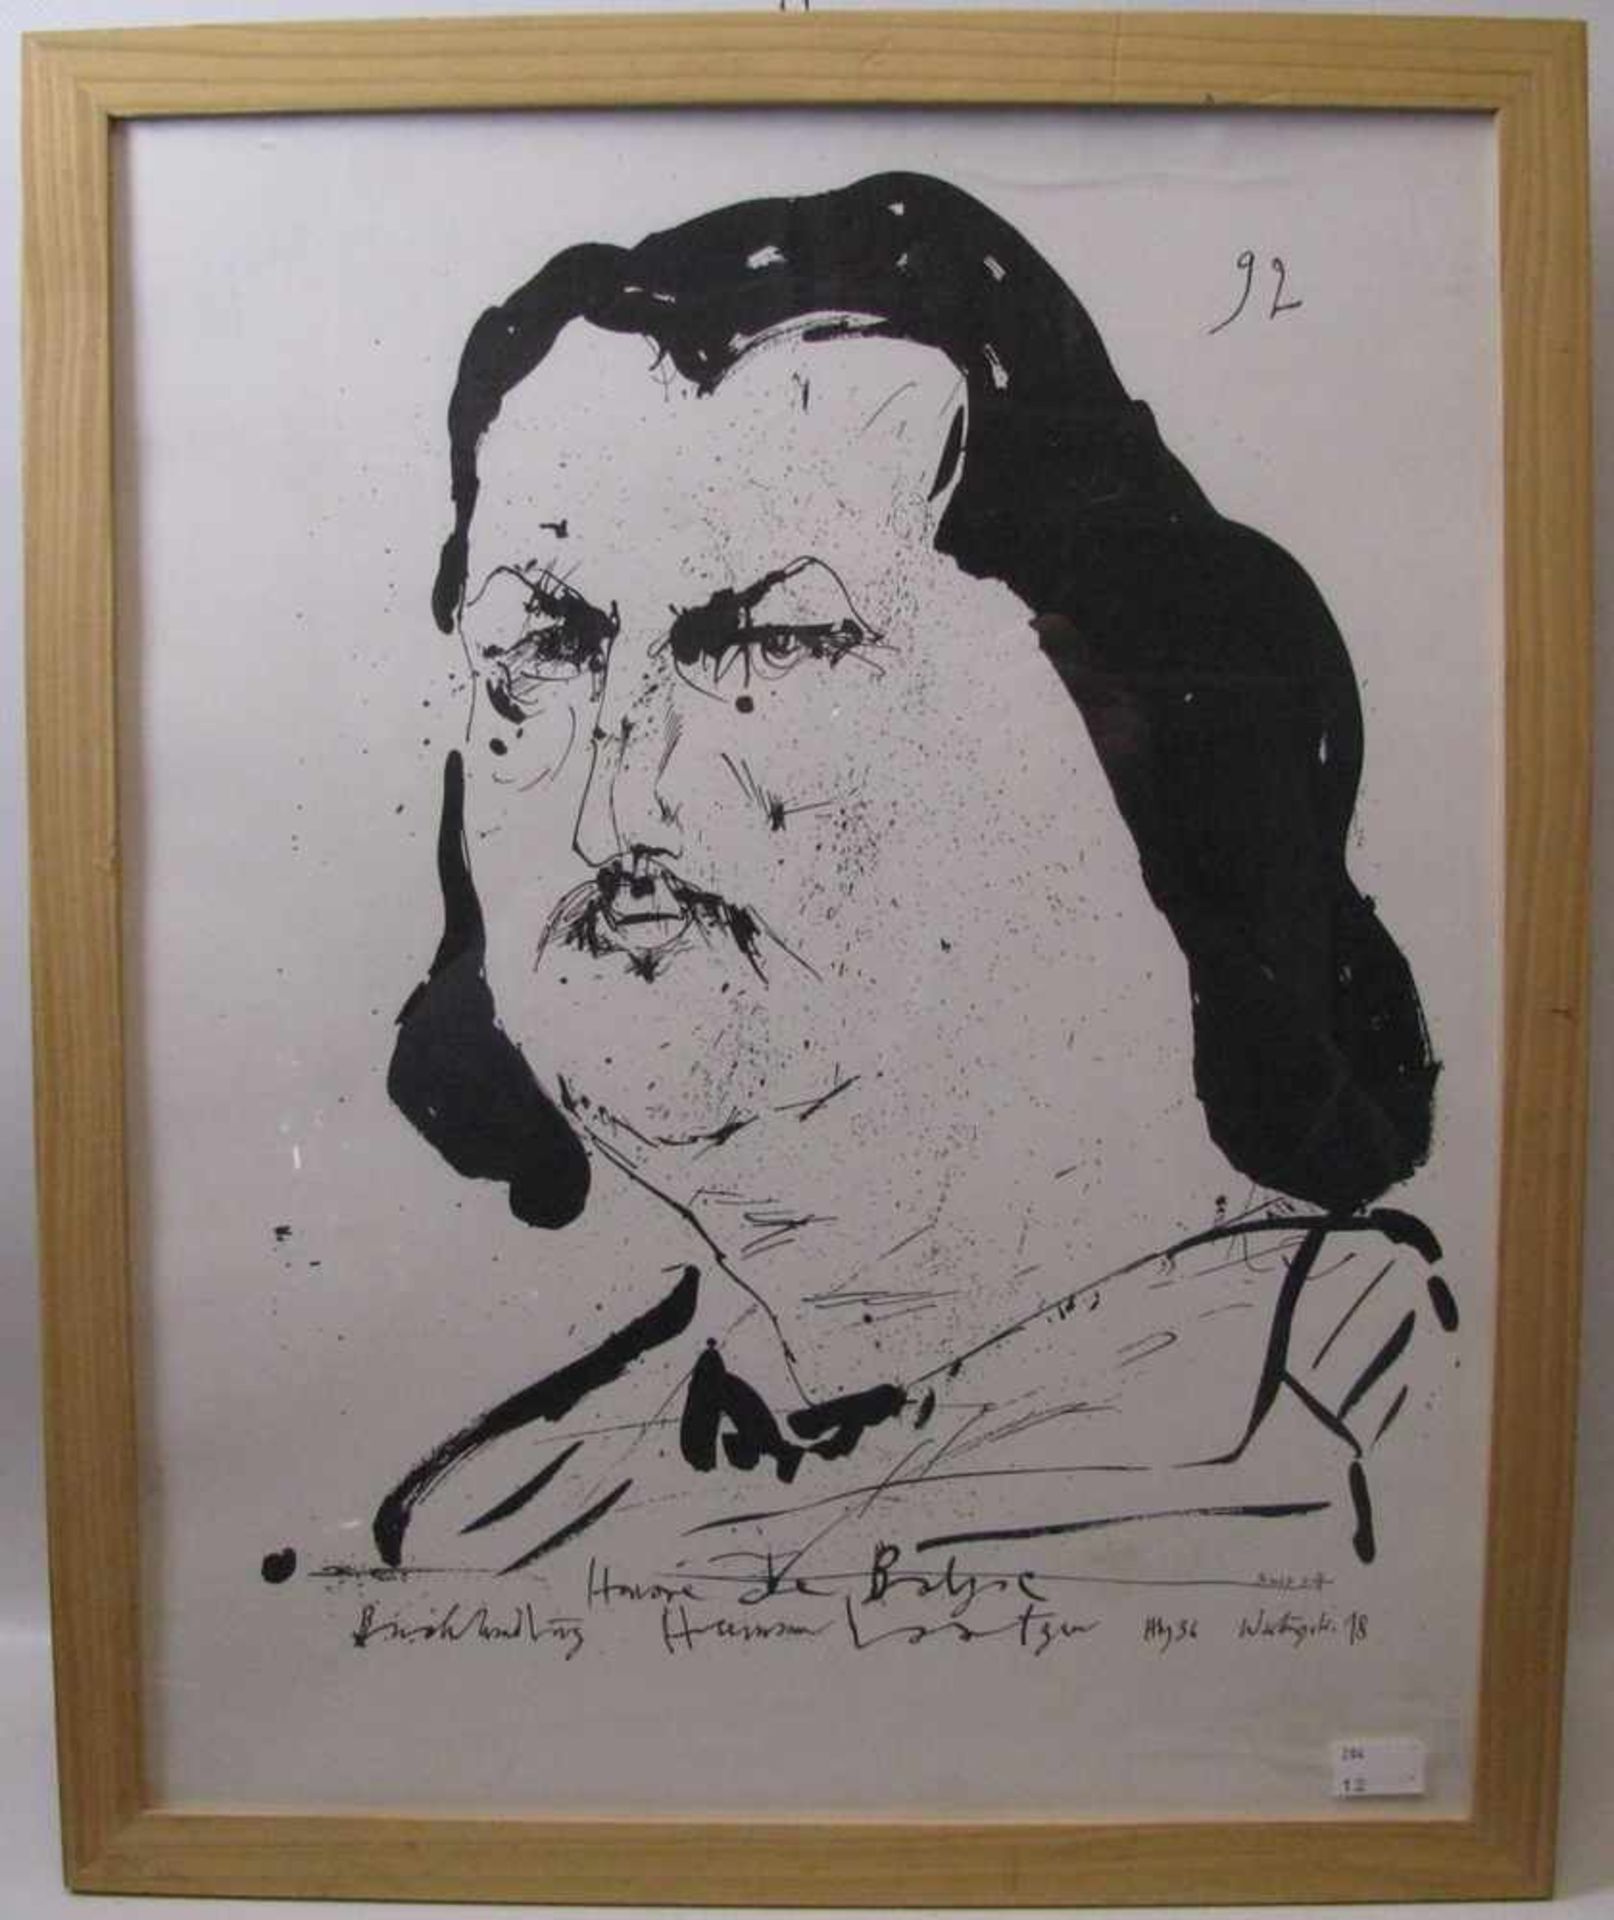 Janssen, Horst, 1929 - 1995, Hamburg -ebd., deutscher Künstler, "Honoré de Balzac", Lithografie,